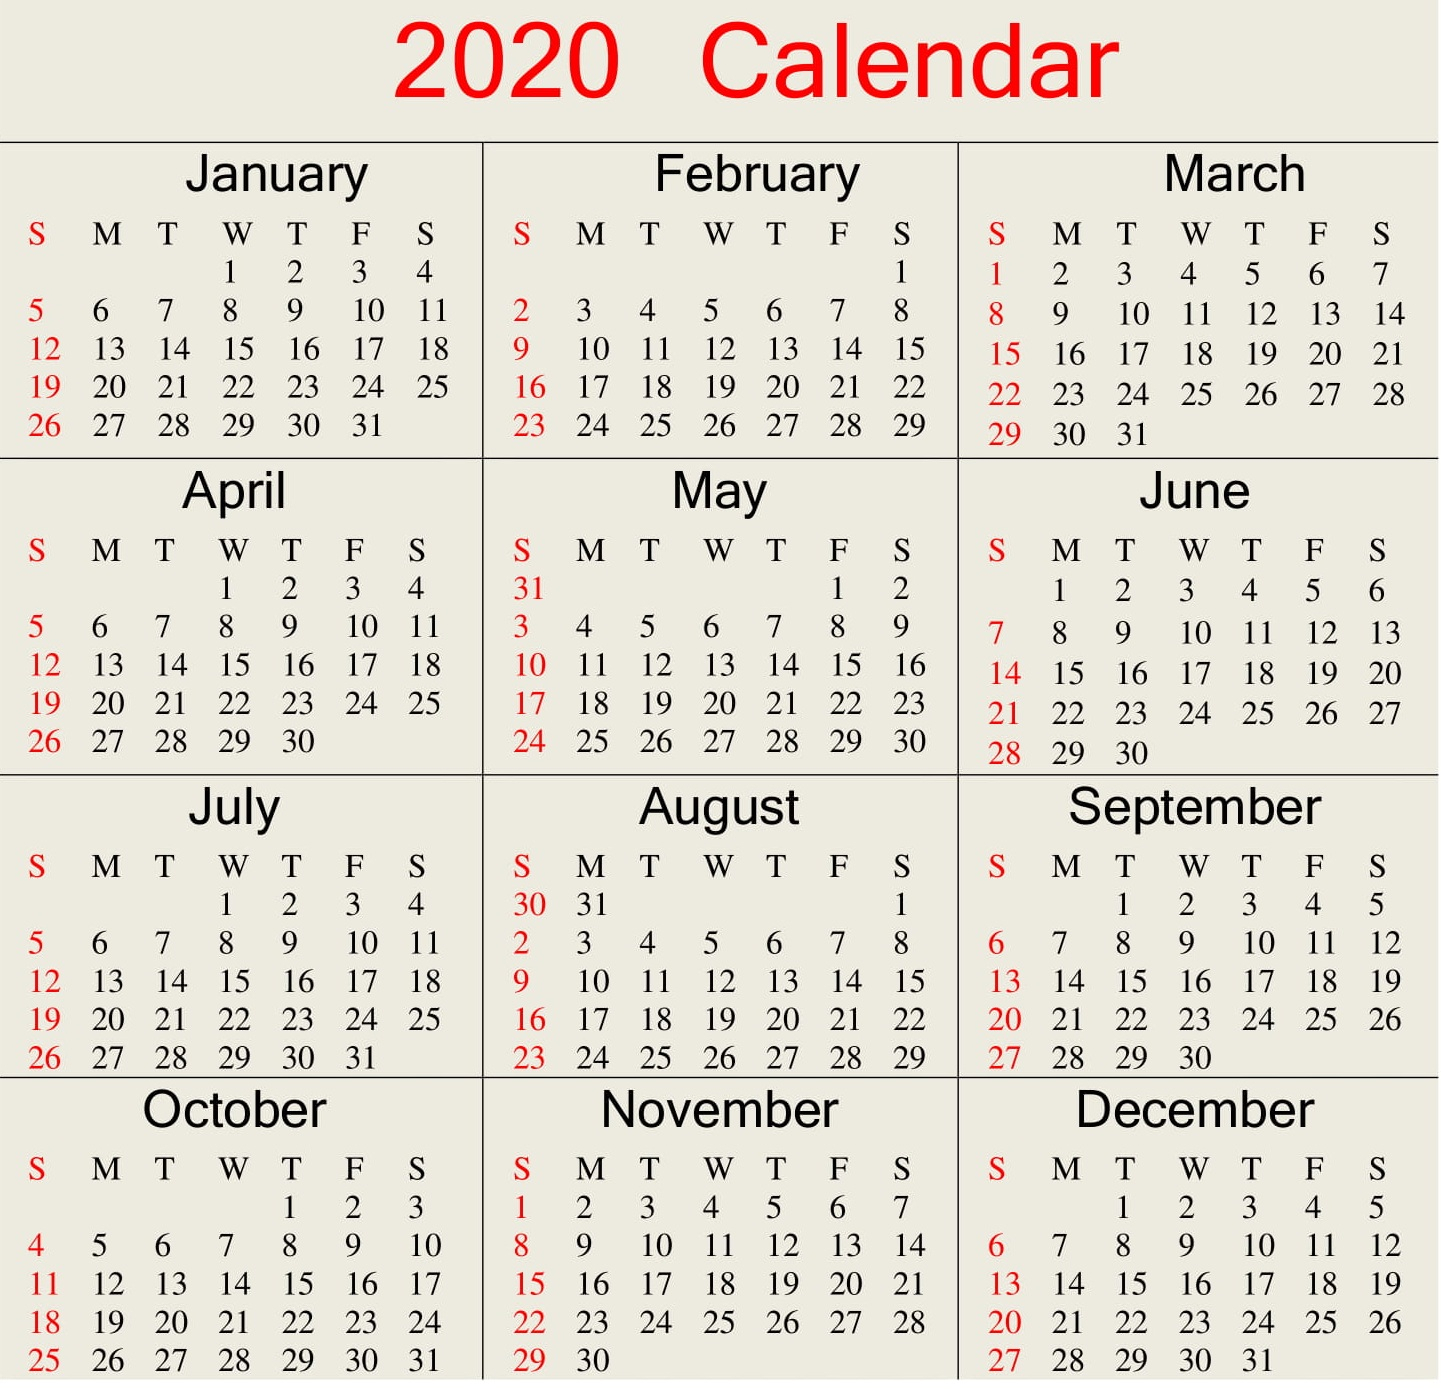 Julian Date Calendar 2020 In Excel | Free Printable Calendar